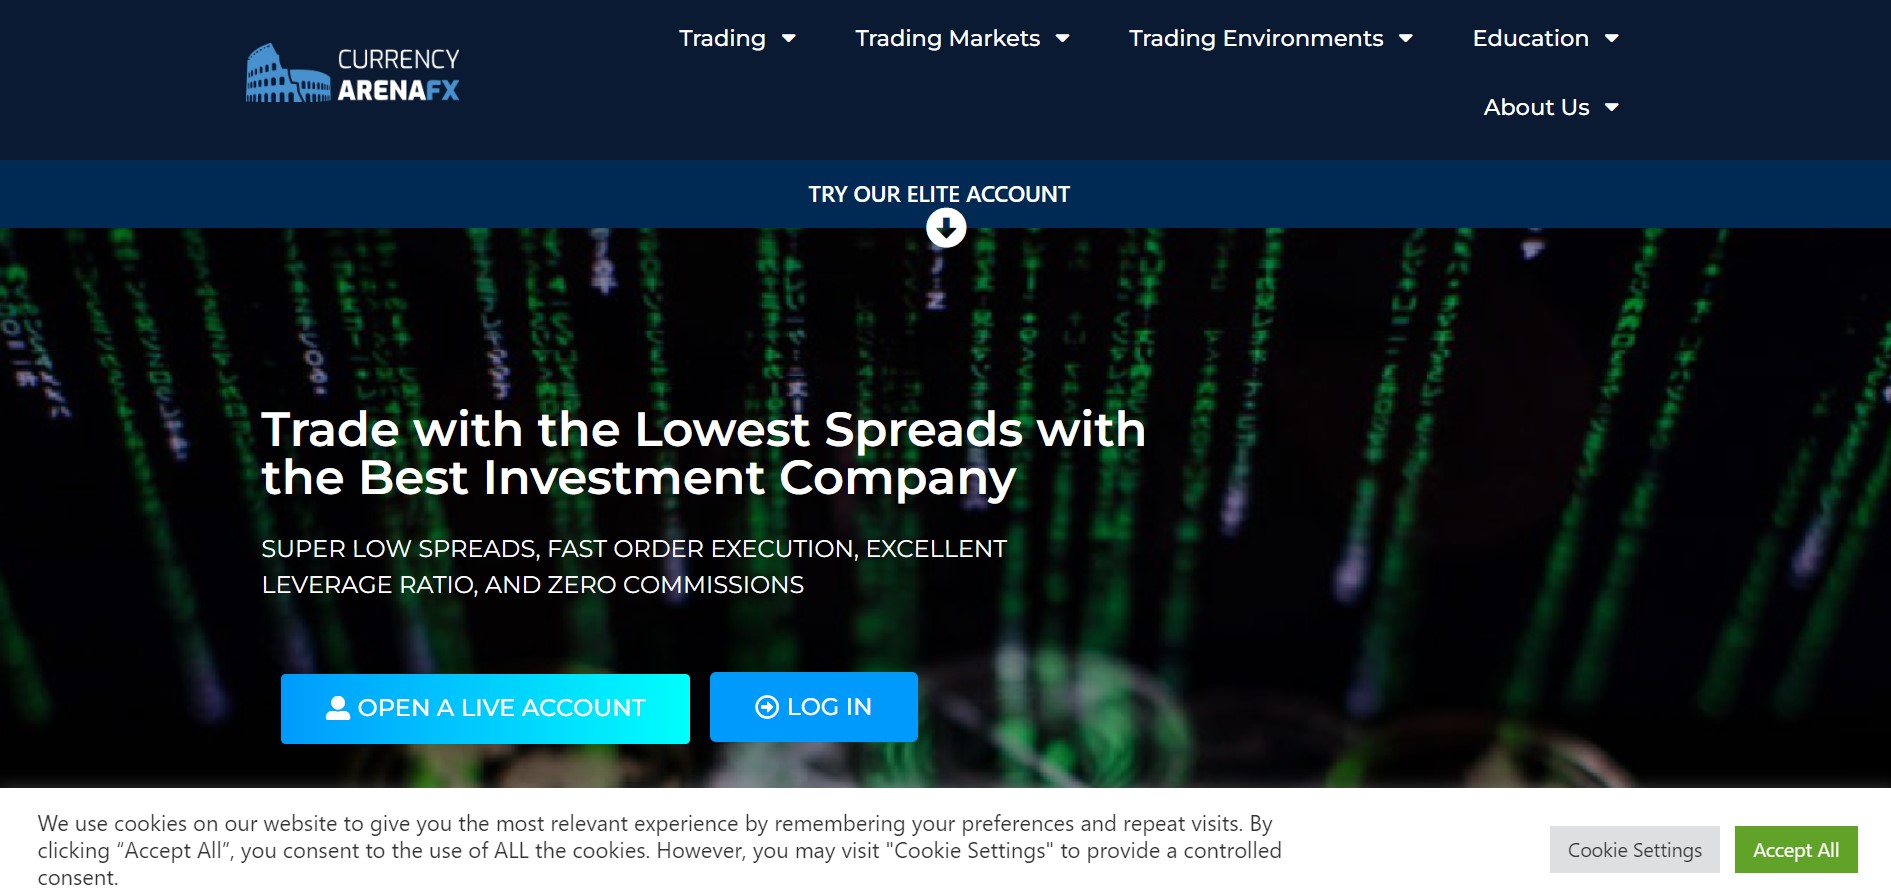 Currency Arena FX website